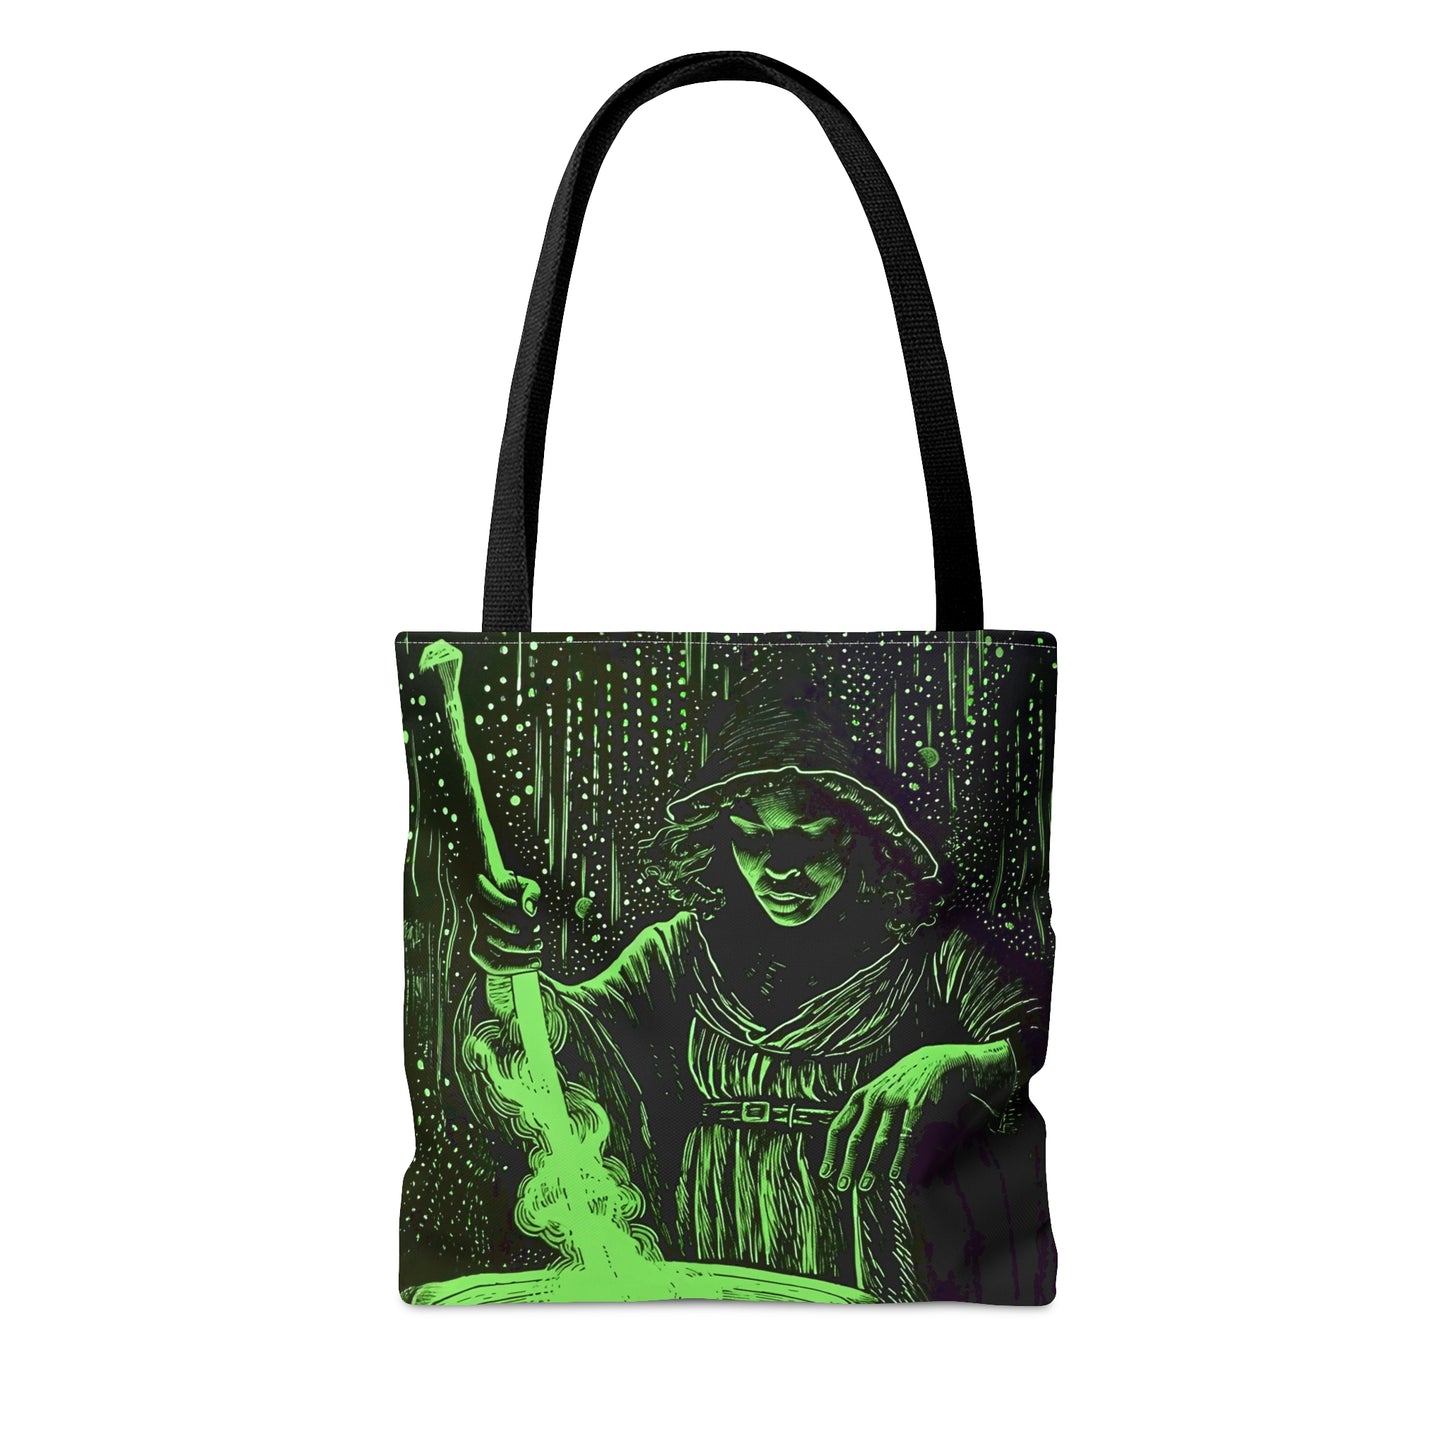 Conjure Woman Tote Bag